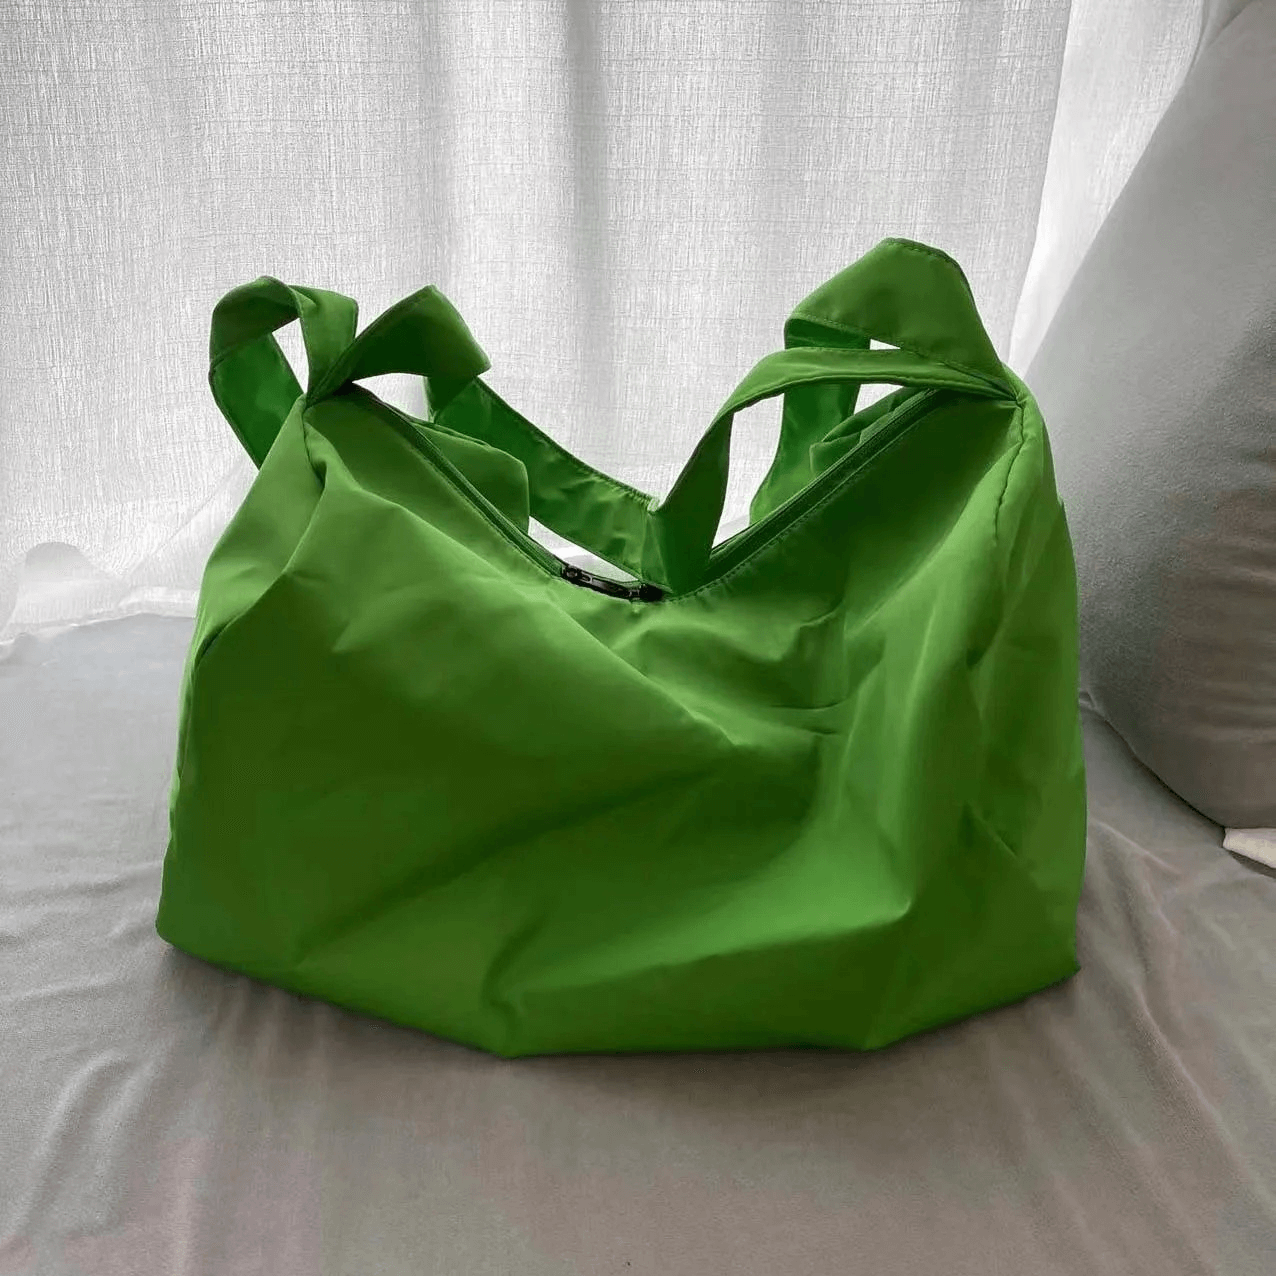 Women's Waterproof Large-Capacity Fitness Tote Bag - SF1993